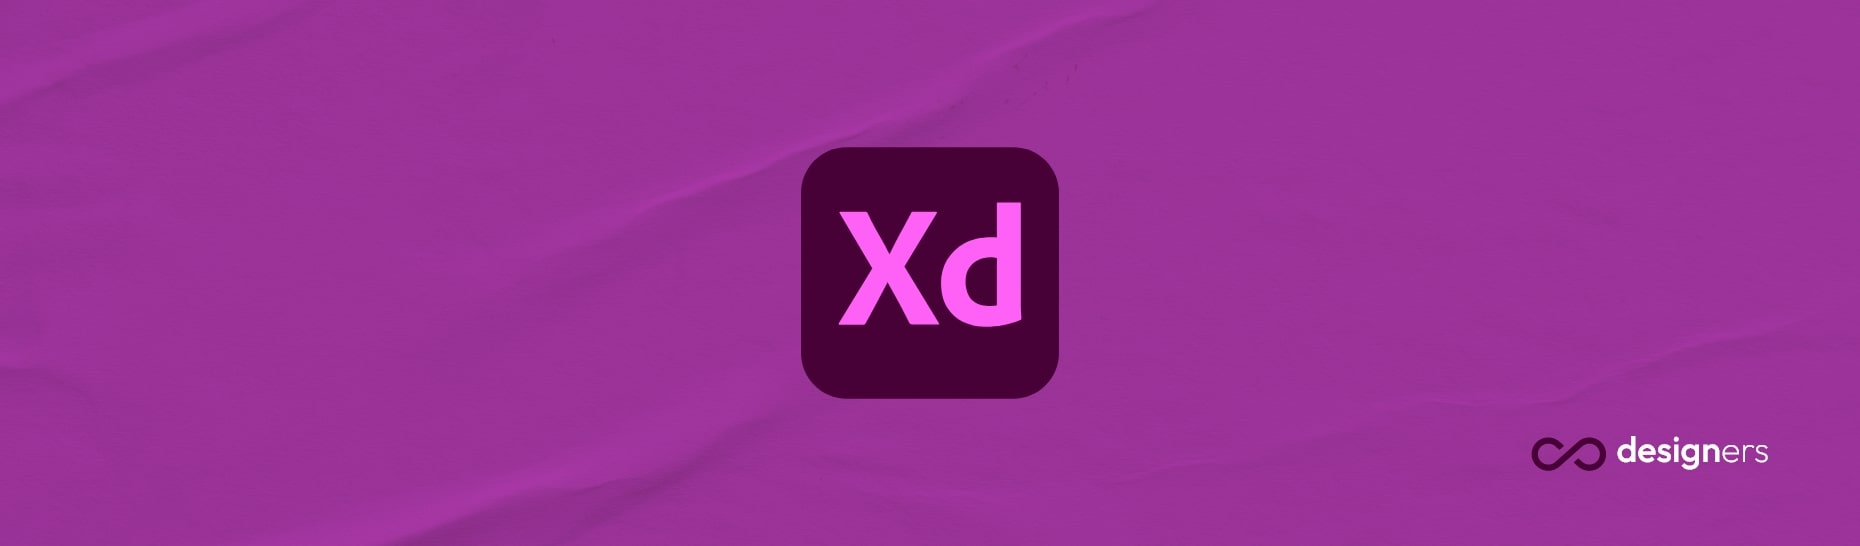 How do I turn my Adobe XD design into a Website?